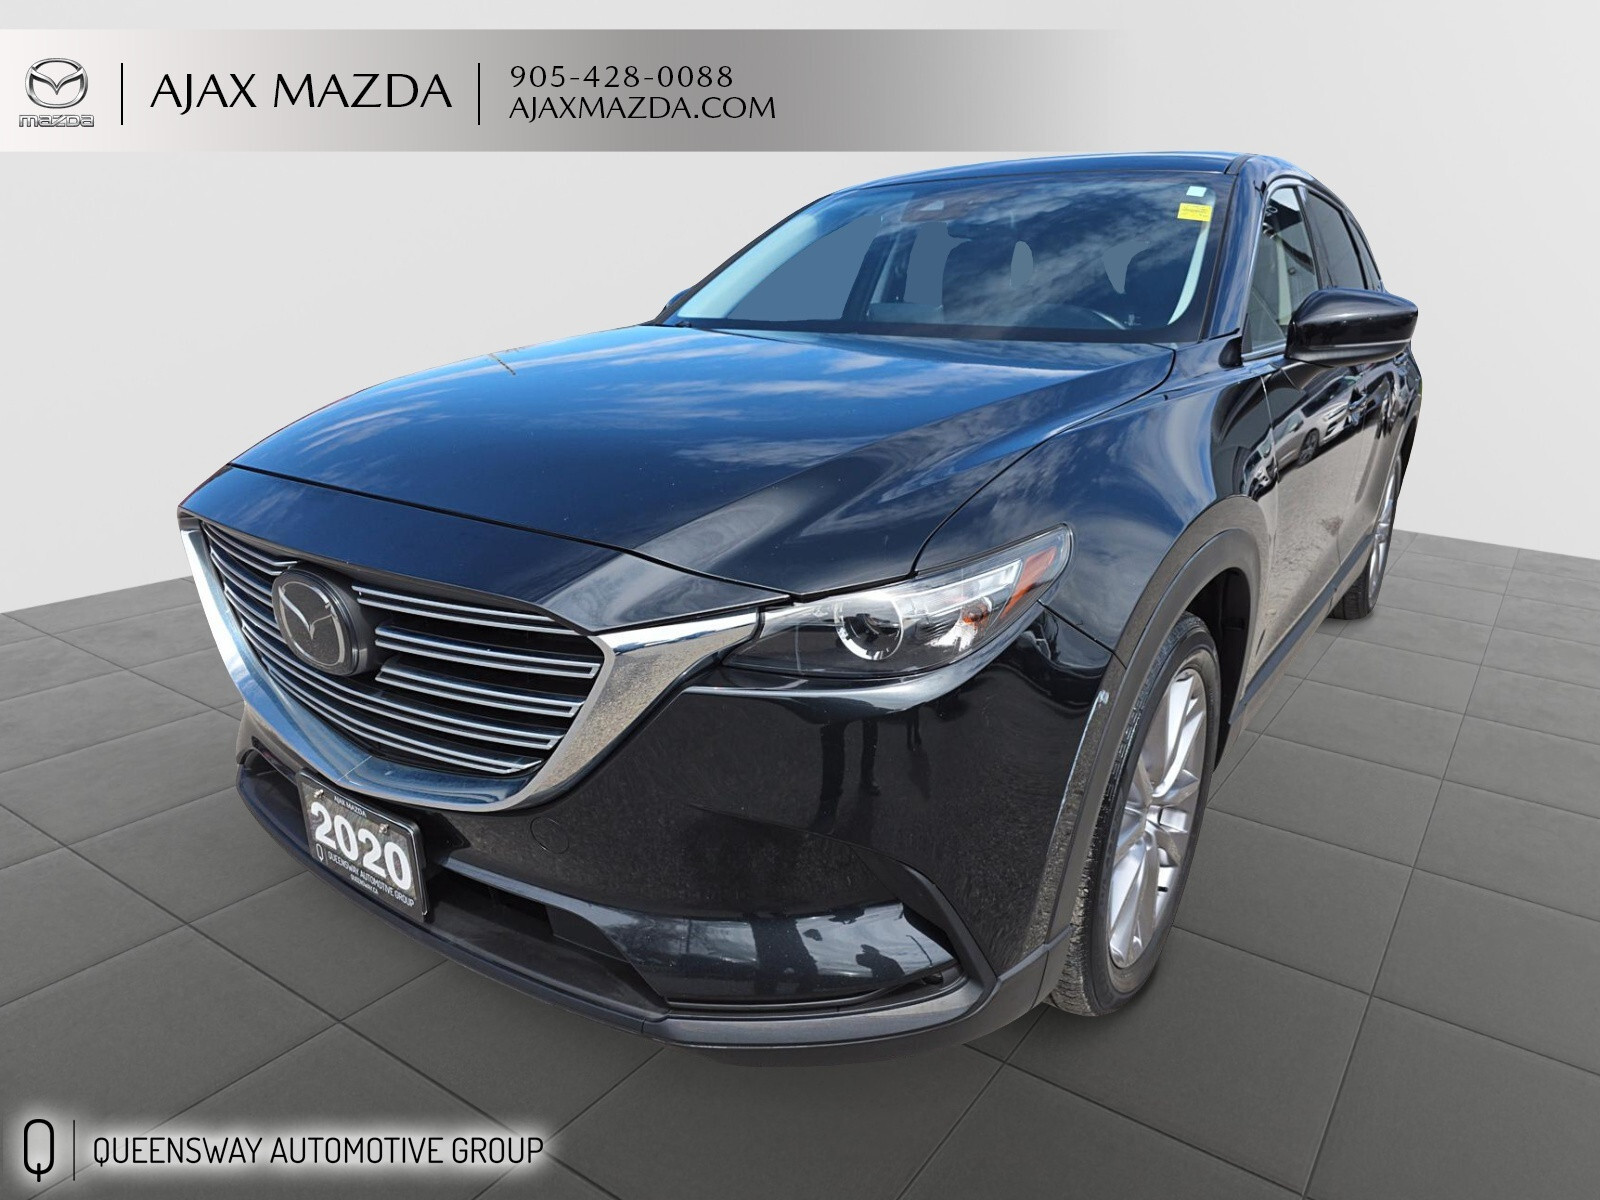 2020 Mazda CX-9 Luxury